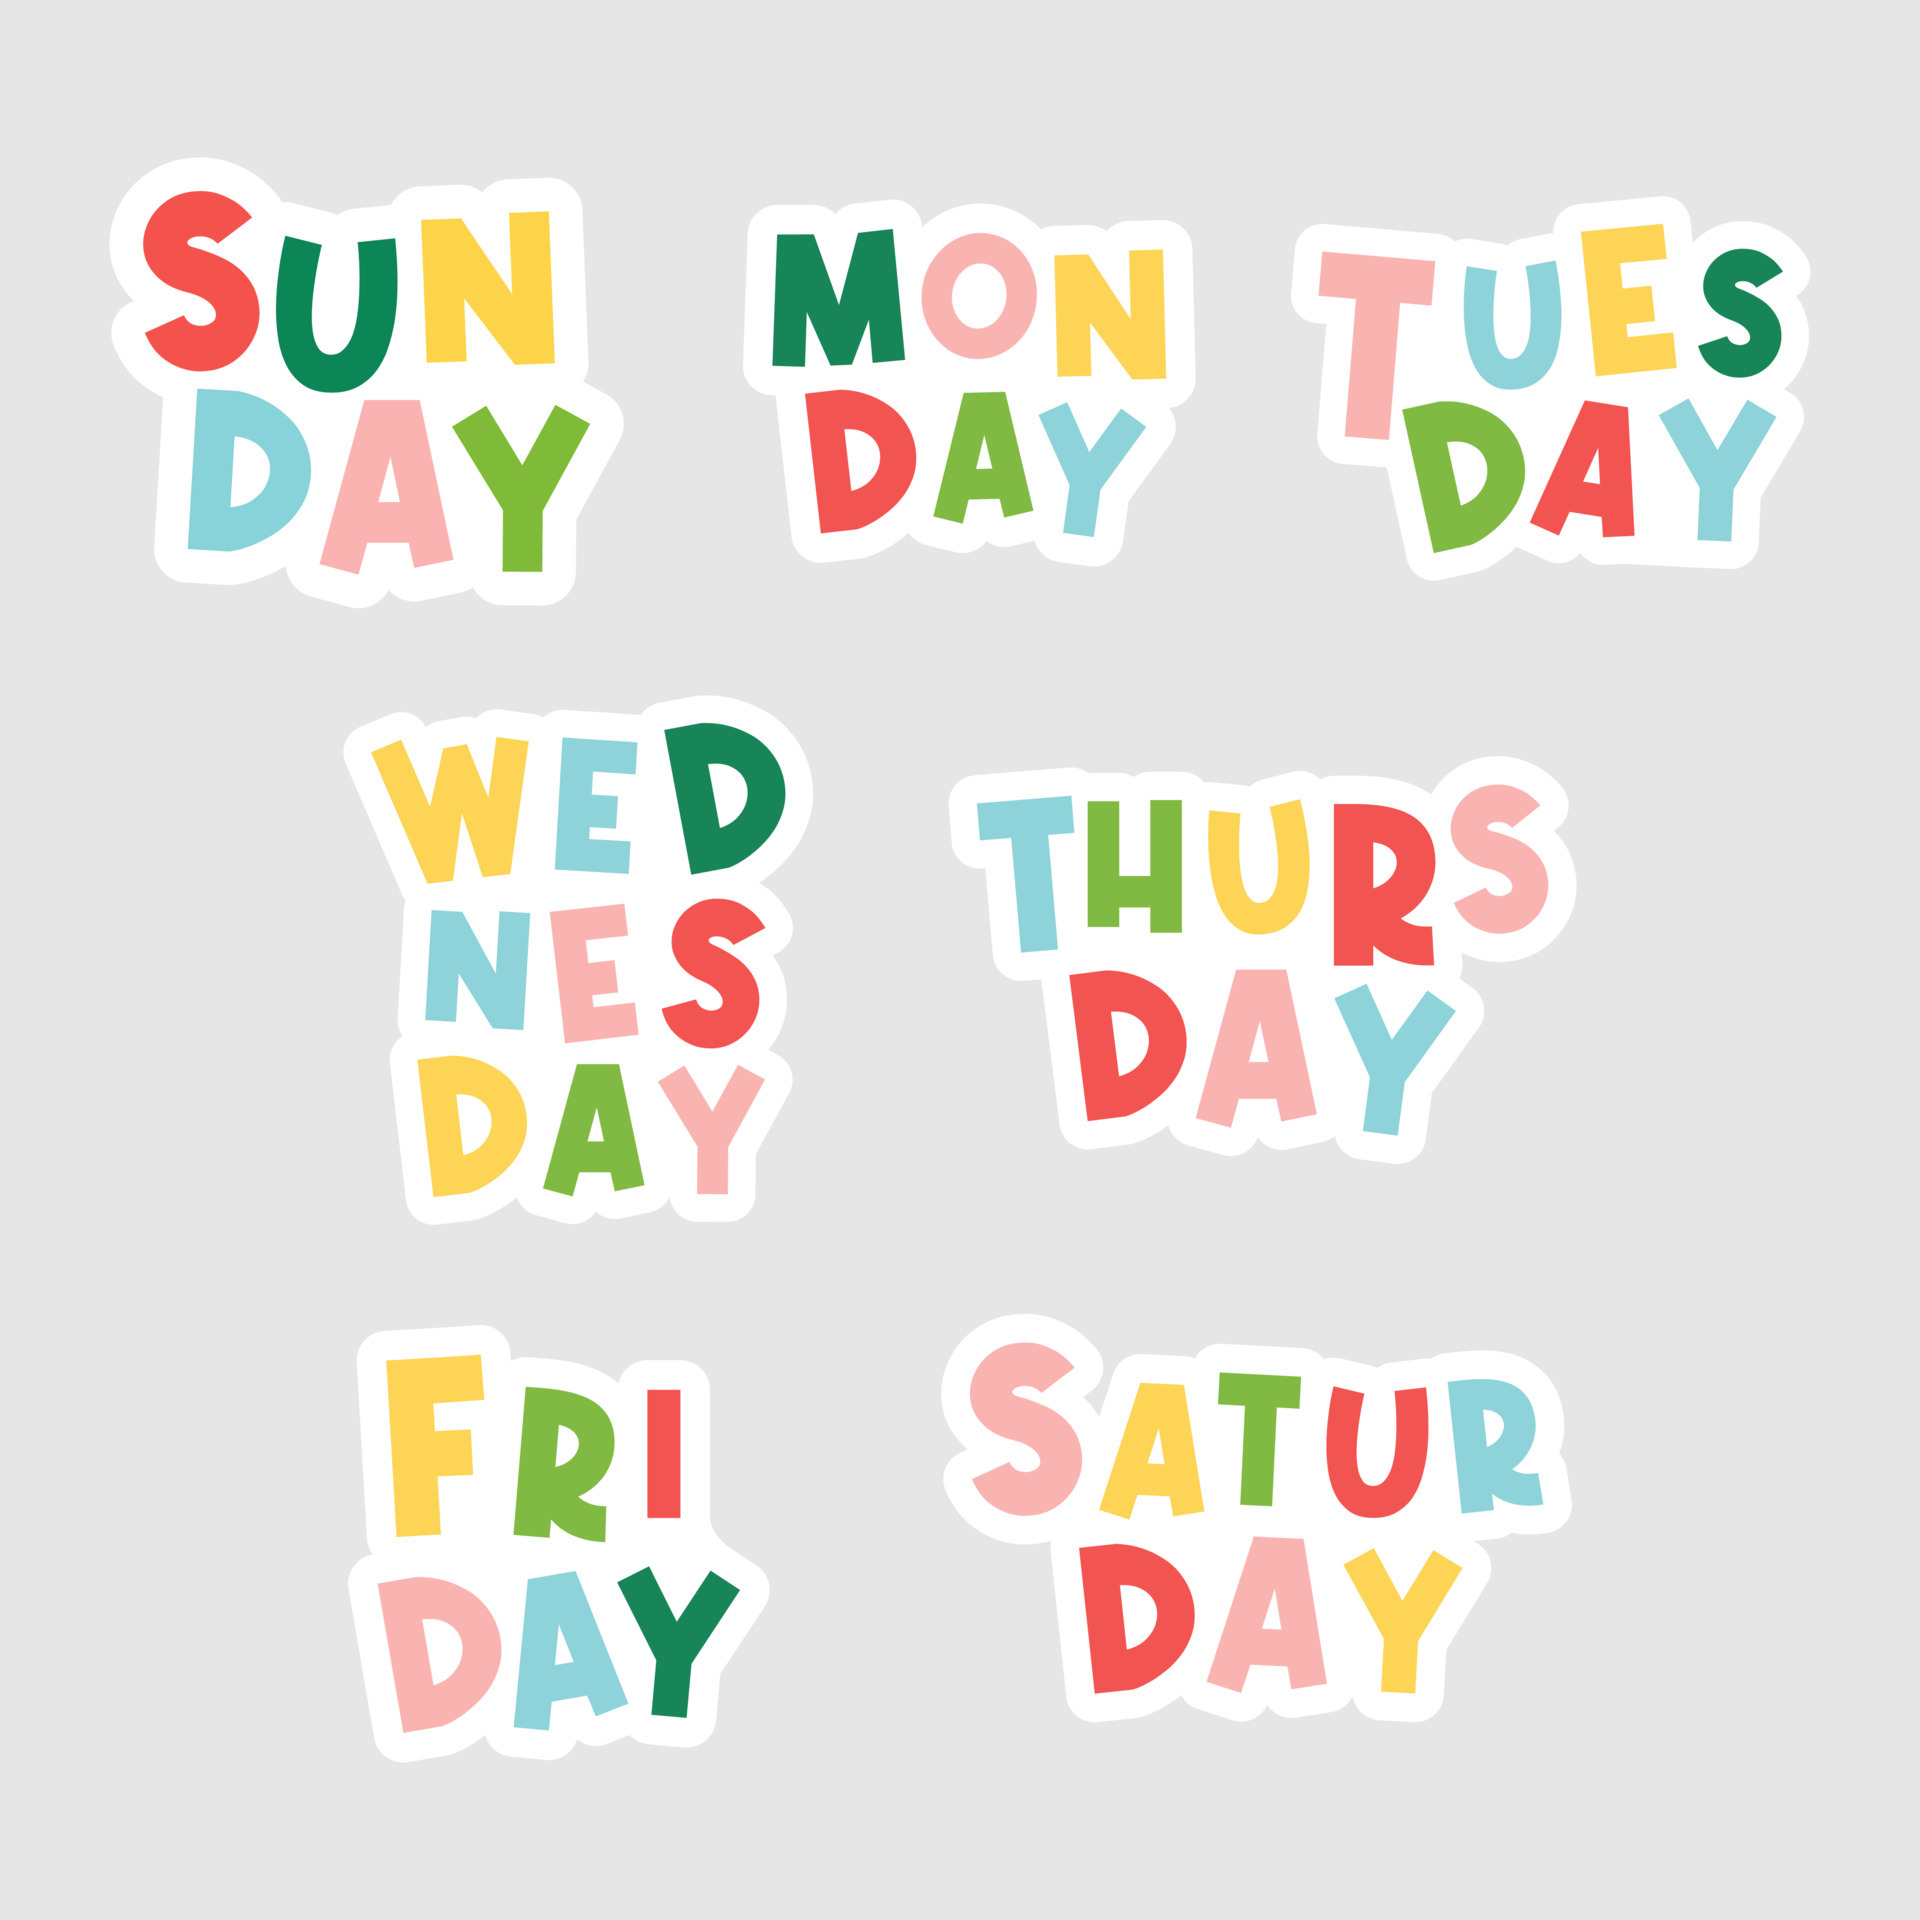 Days of the week: Sunday, Monday, Tuesday, Wednesday, Thursday, Friday,  Saturday Stock Vector